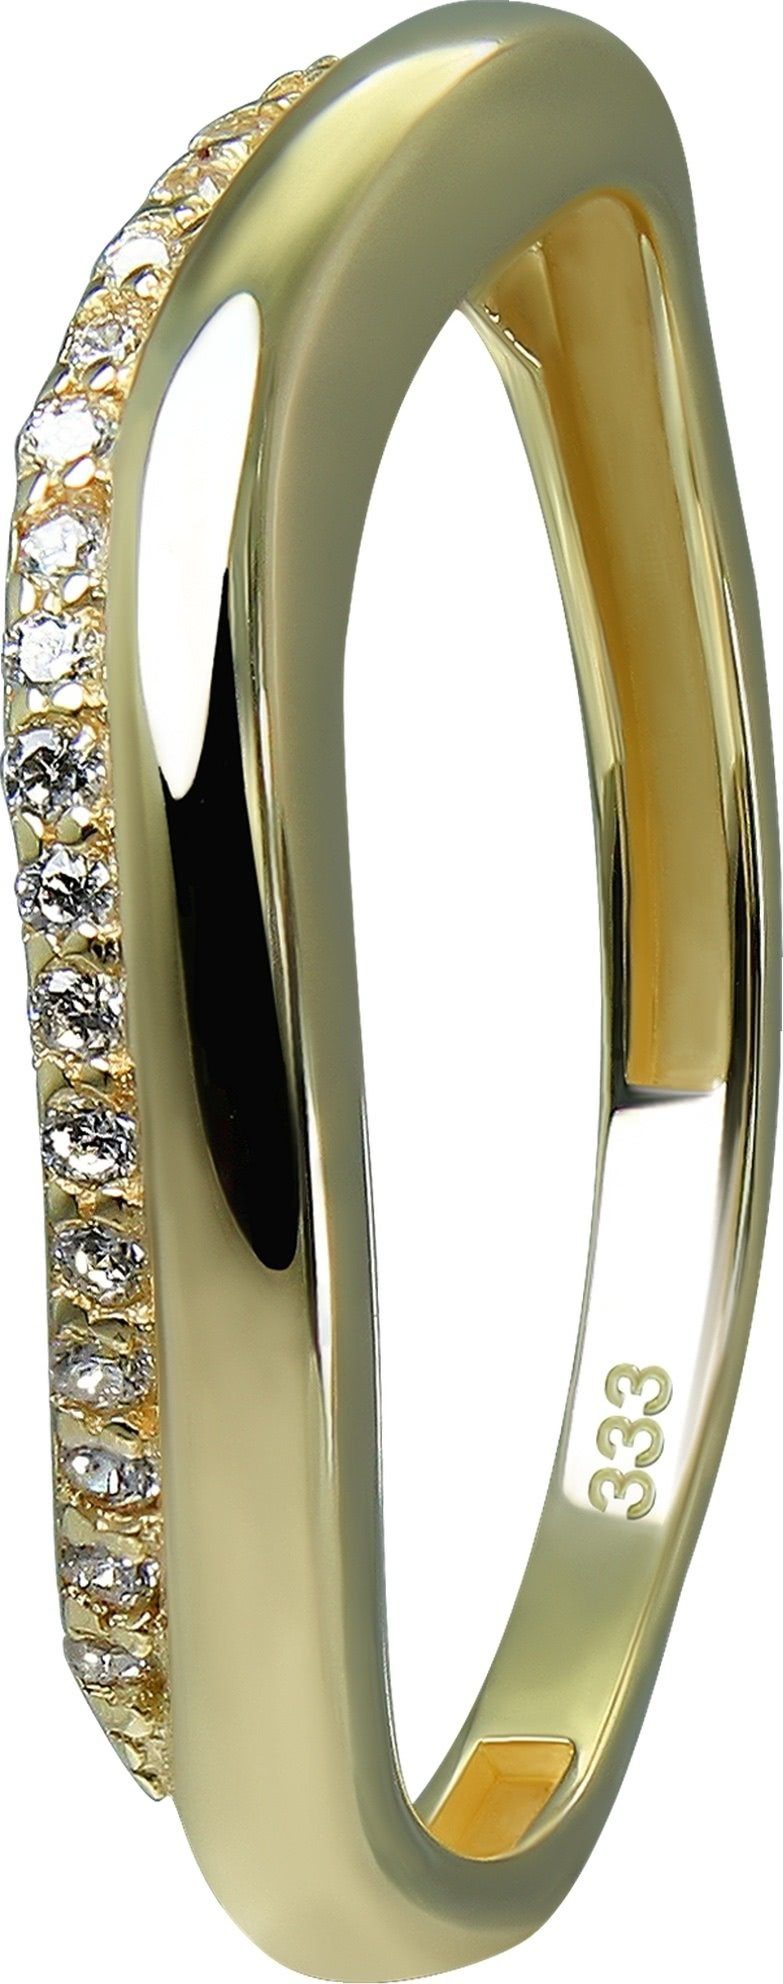 GoldDream Goldring GoldDream Gold Ring Welle Gr.54 Zirkonia (Fingerring), Damen Ring Welle 333 Gelbgold - 8 Karat, Farbe: gold, weiß